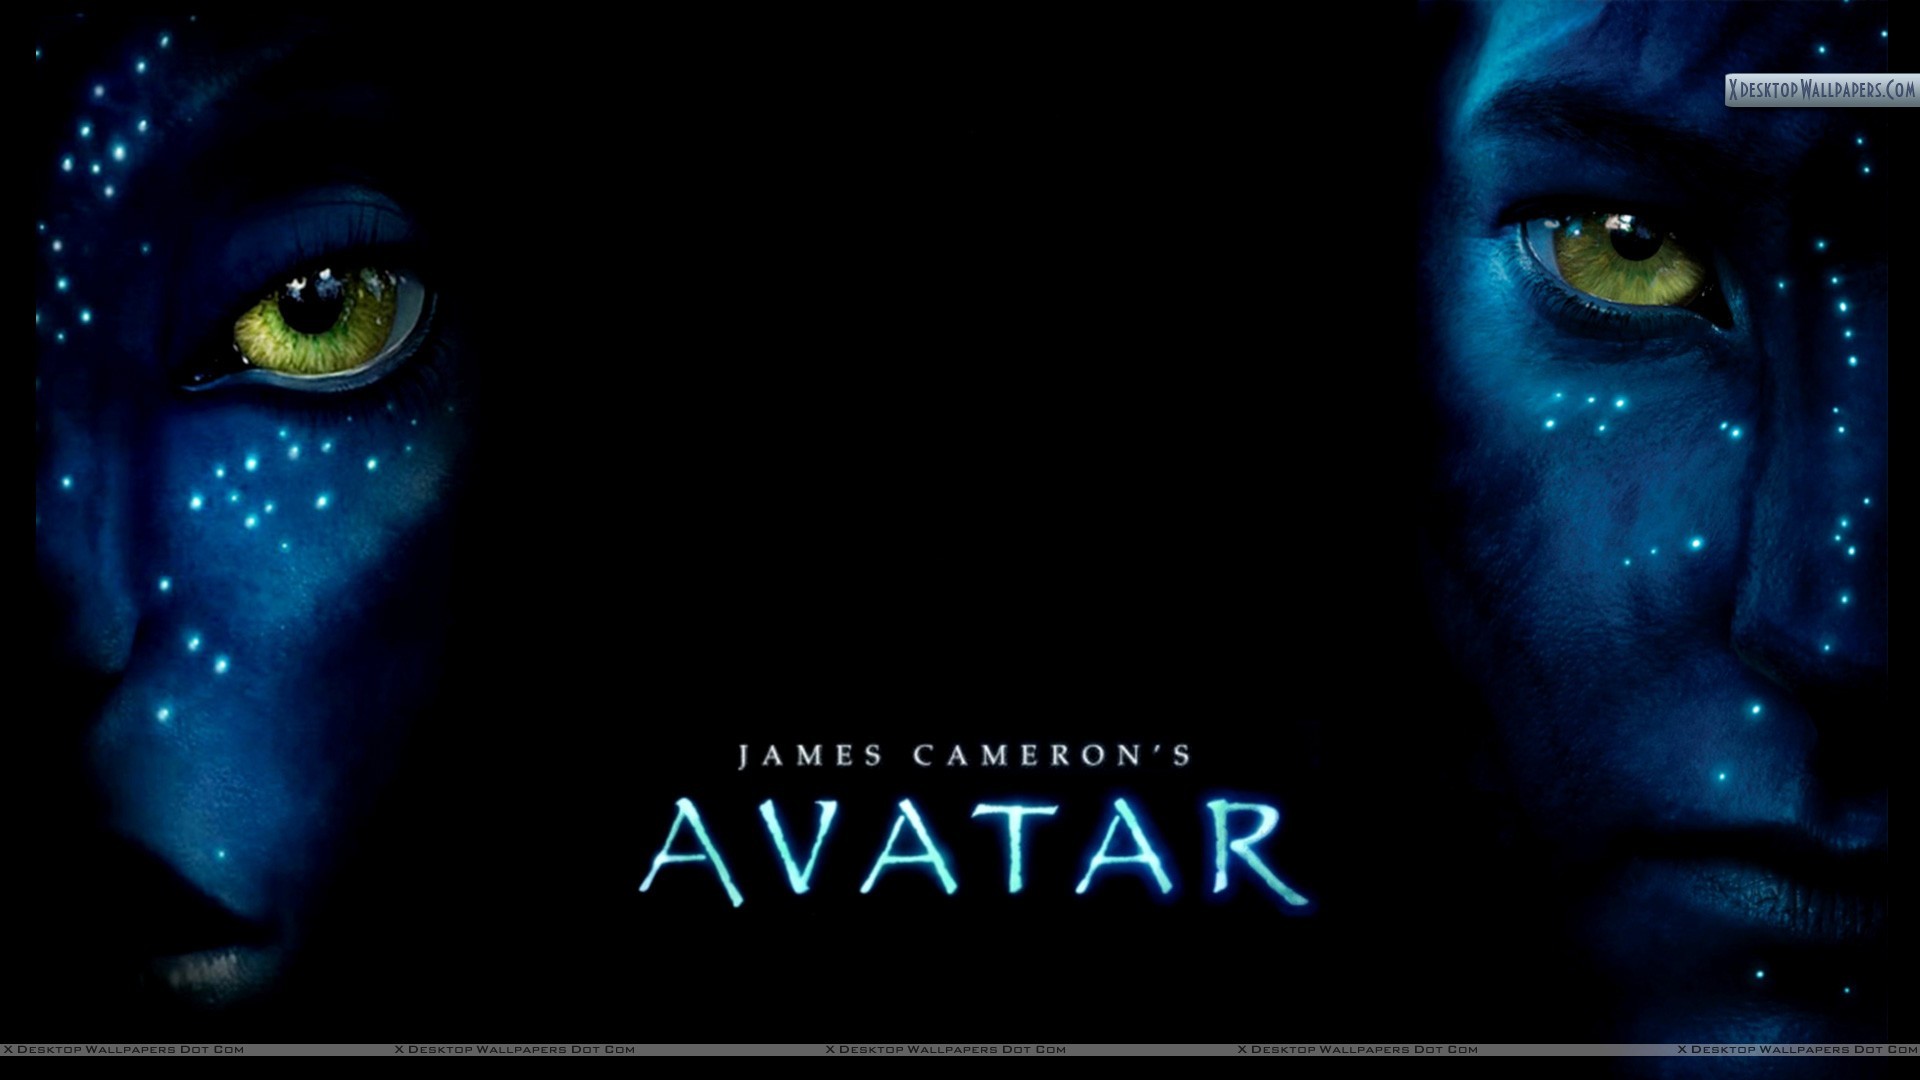 1920x1080 Avatar Movie Poster